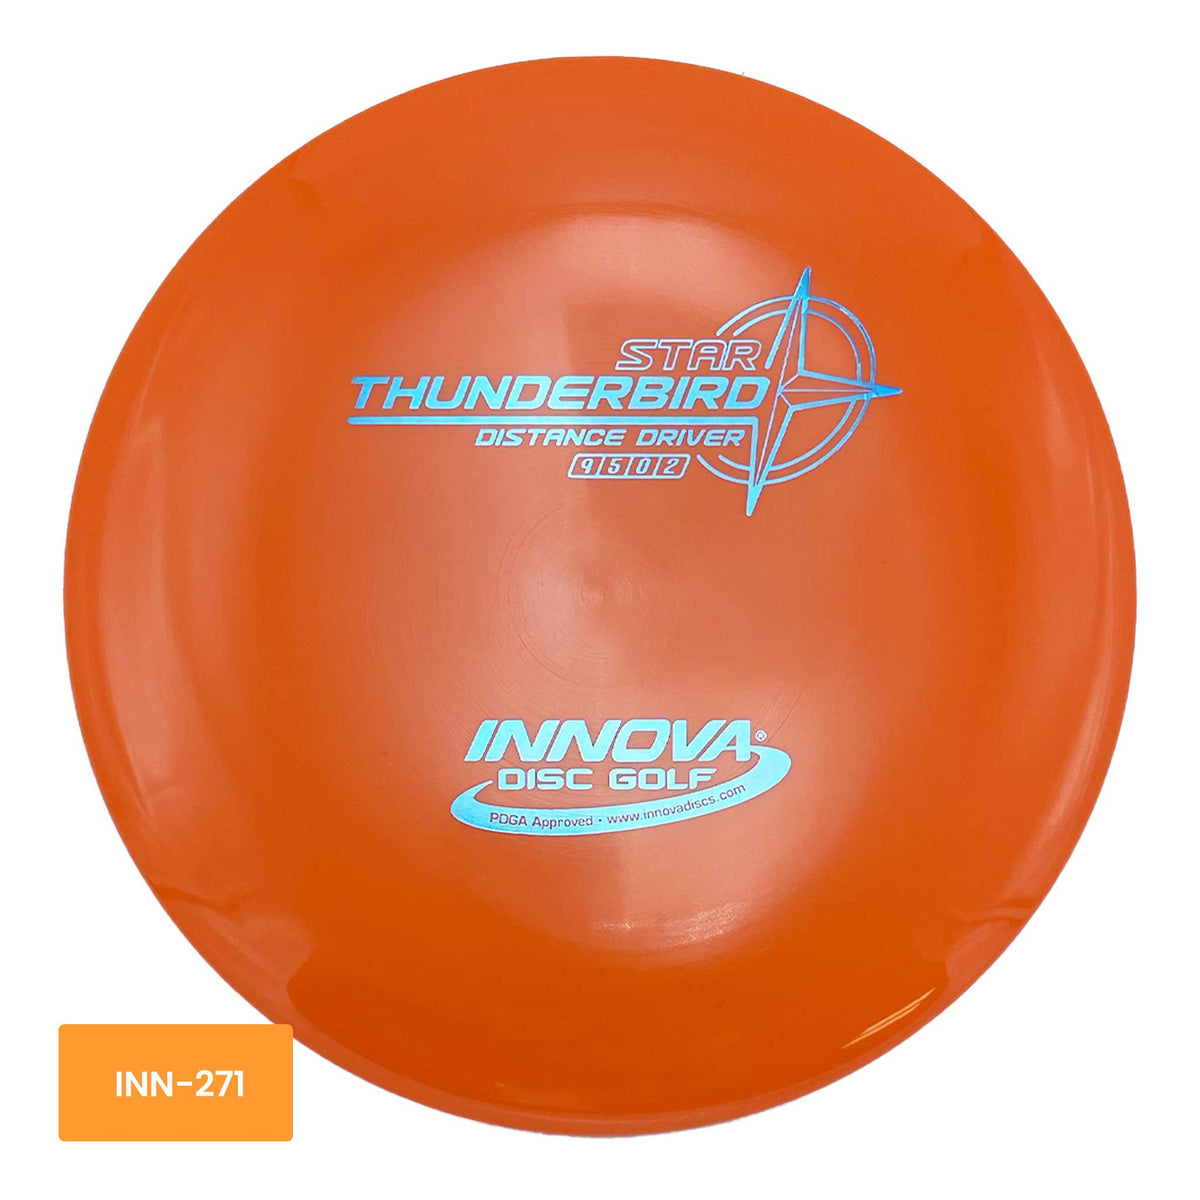 Innova Disc Golf Star Thunderbird distance driver - Orange